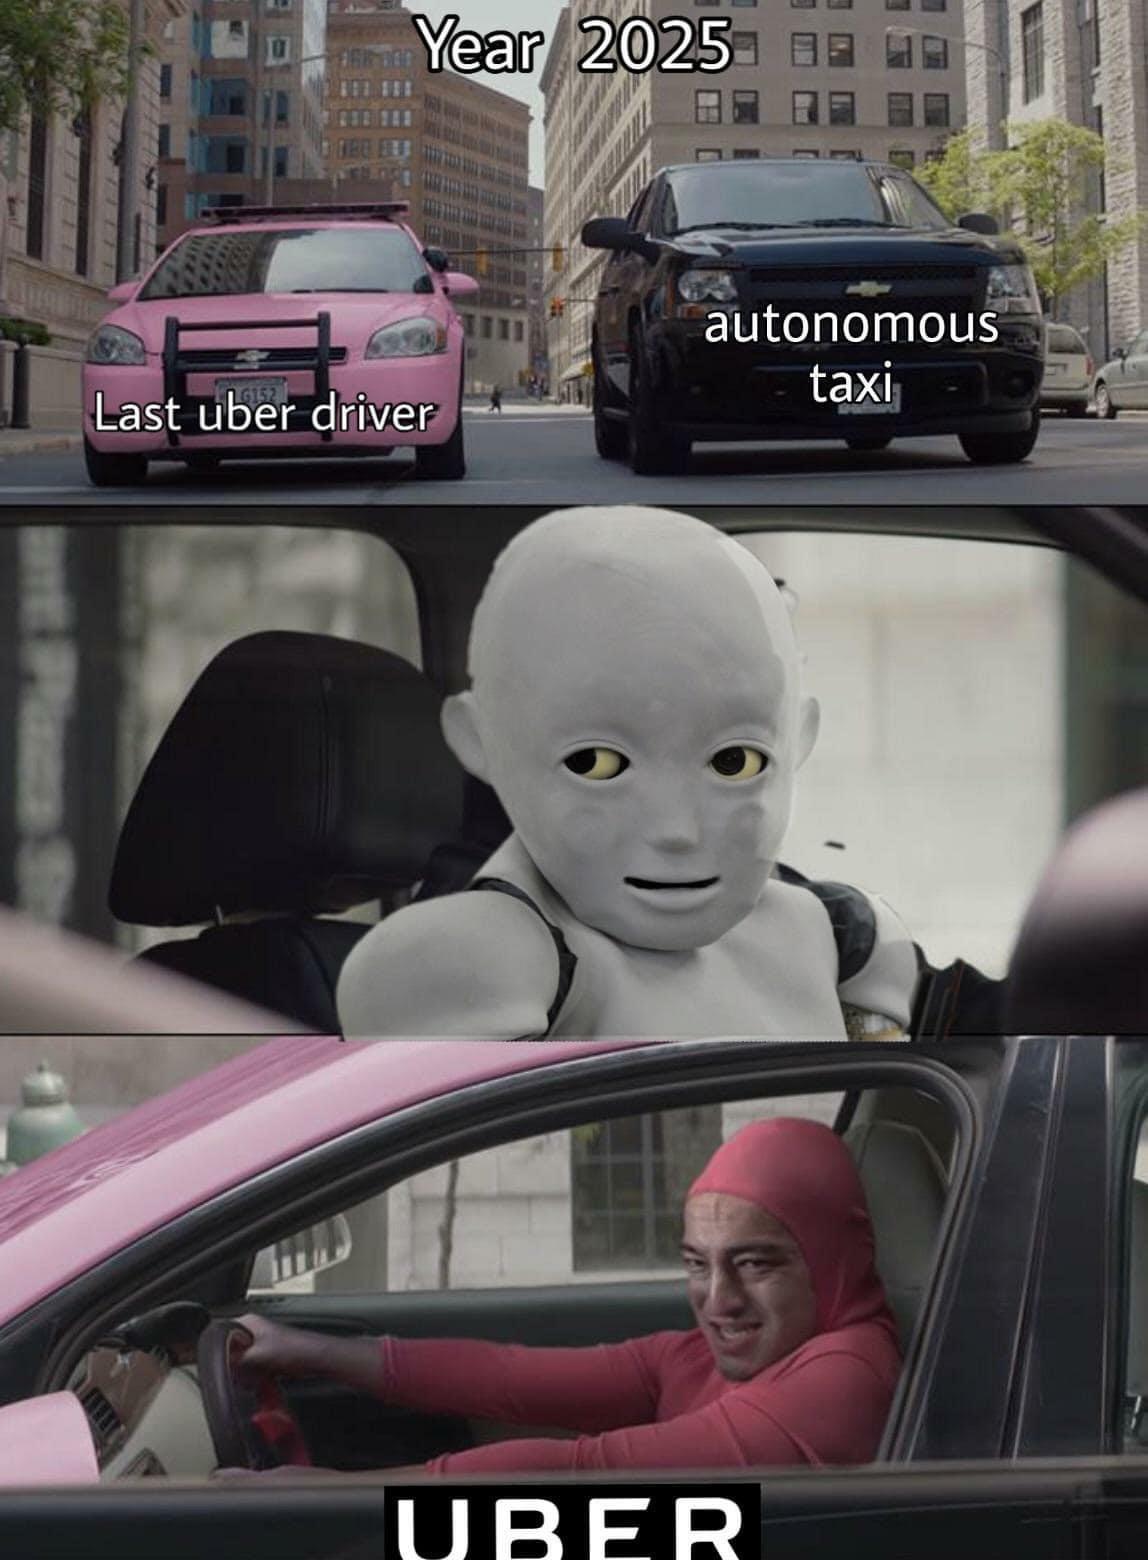 funny memes - vehicle door - Year 2025 Last uber driver autonomous taxi Uber